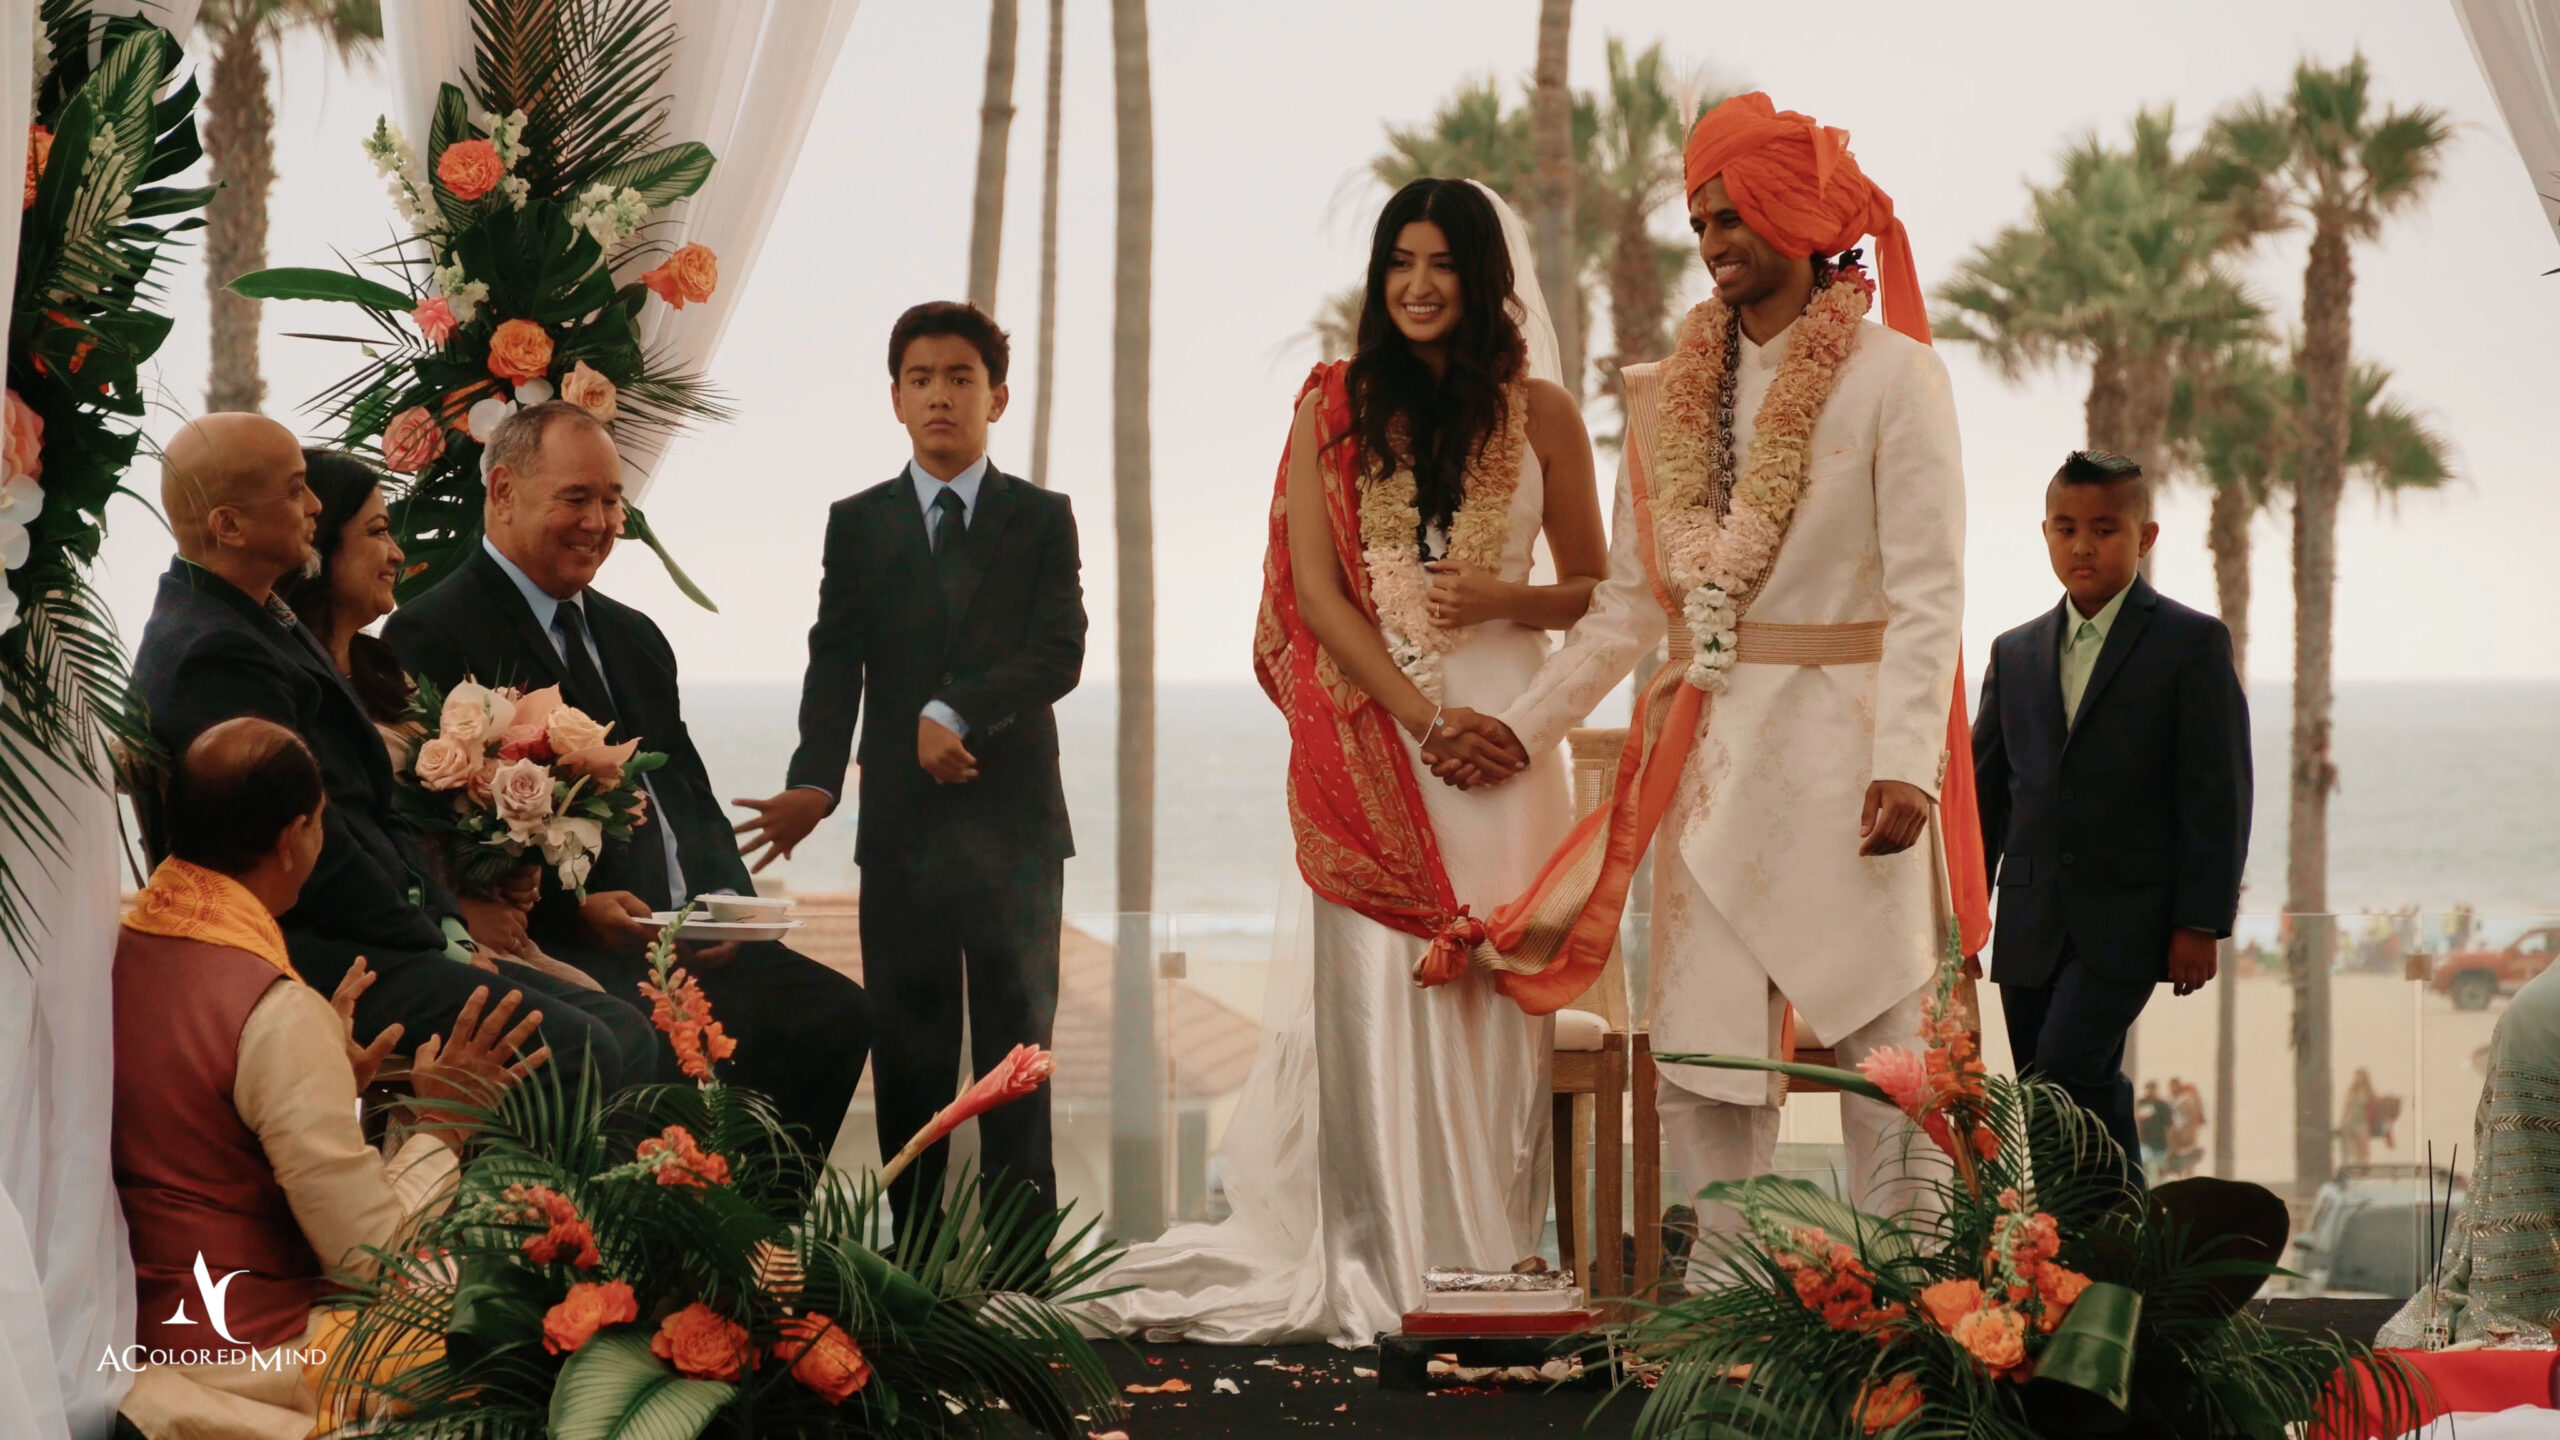 Traditonal Indian wedding Ceremony.